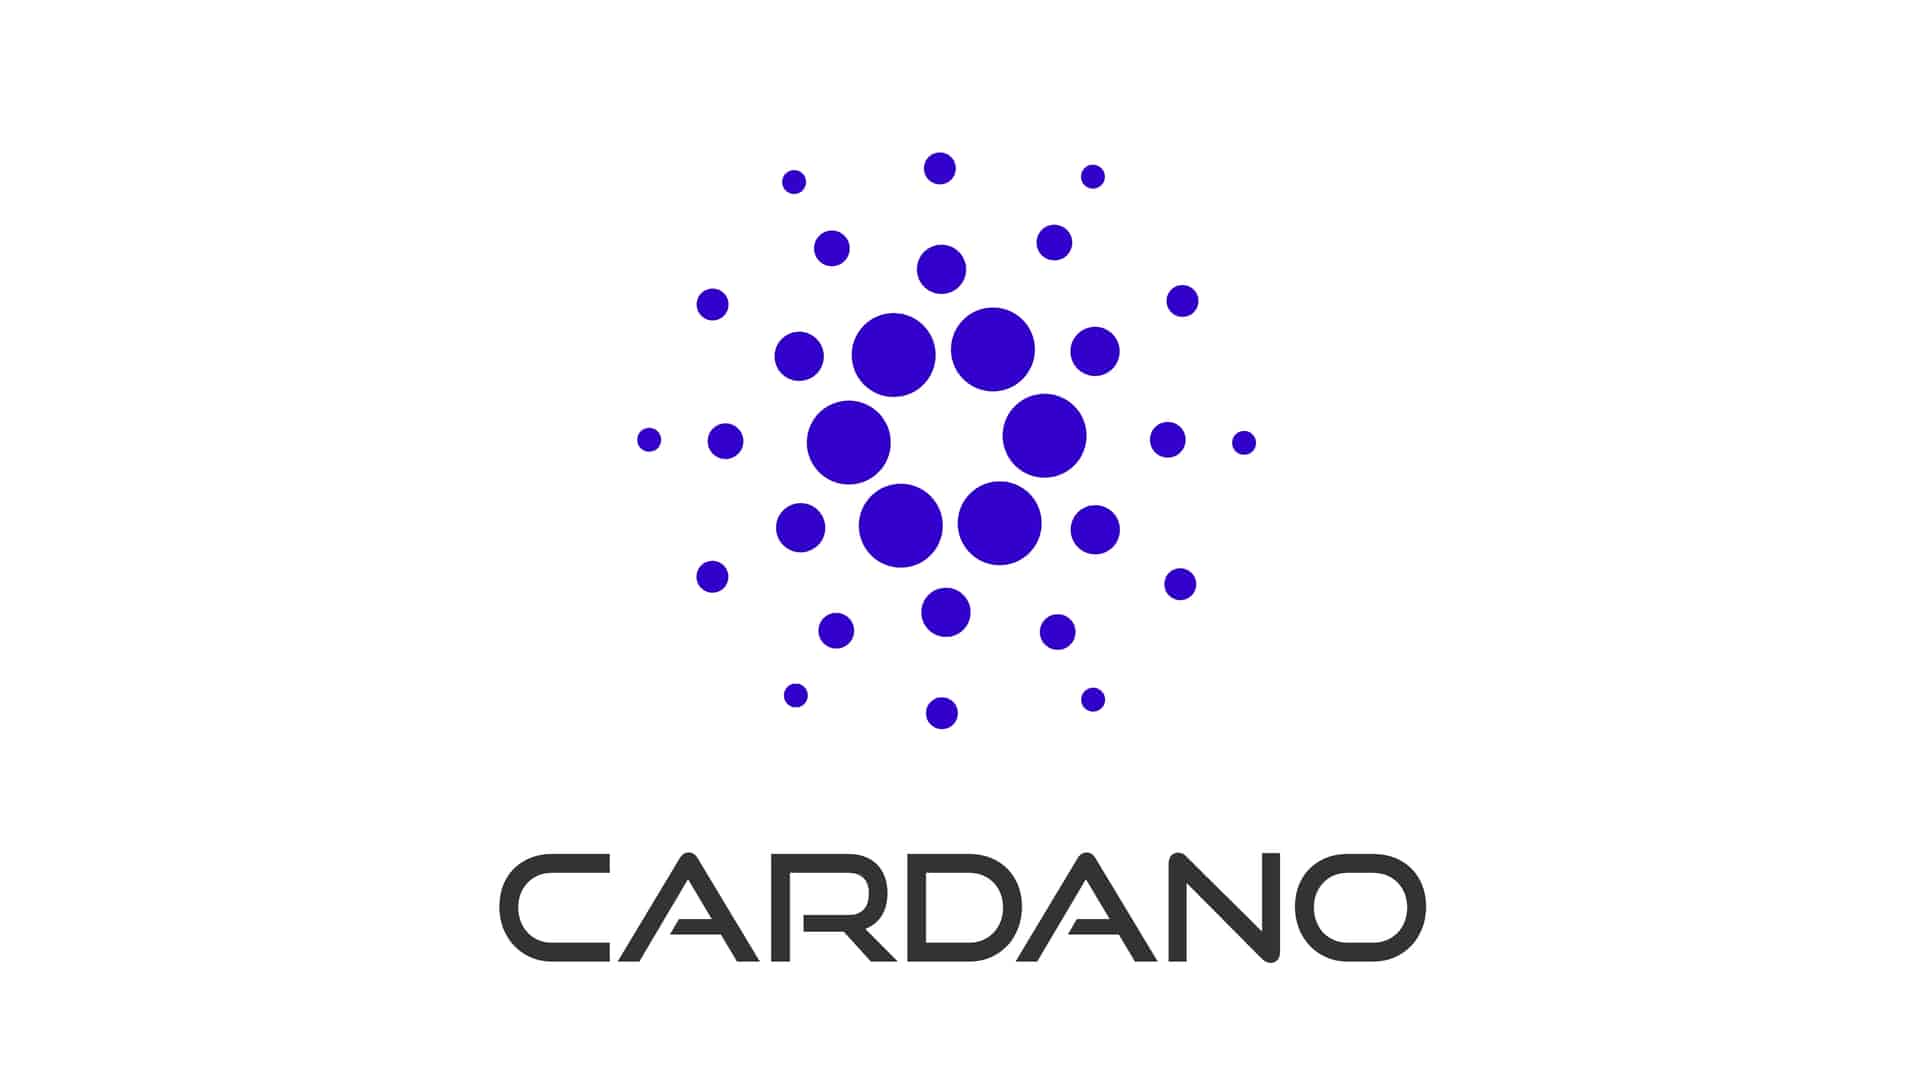 Cardano is preparing another massive upgrade